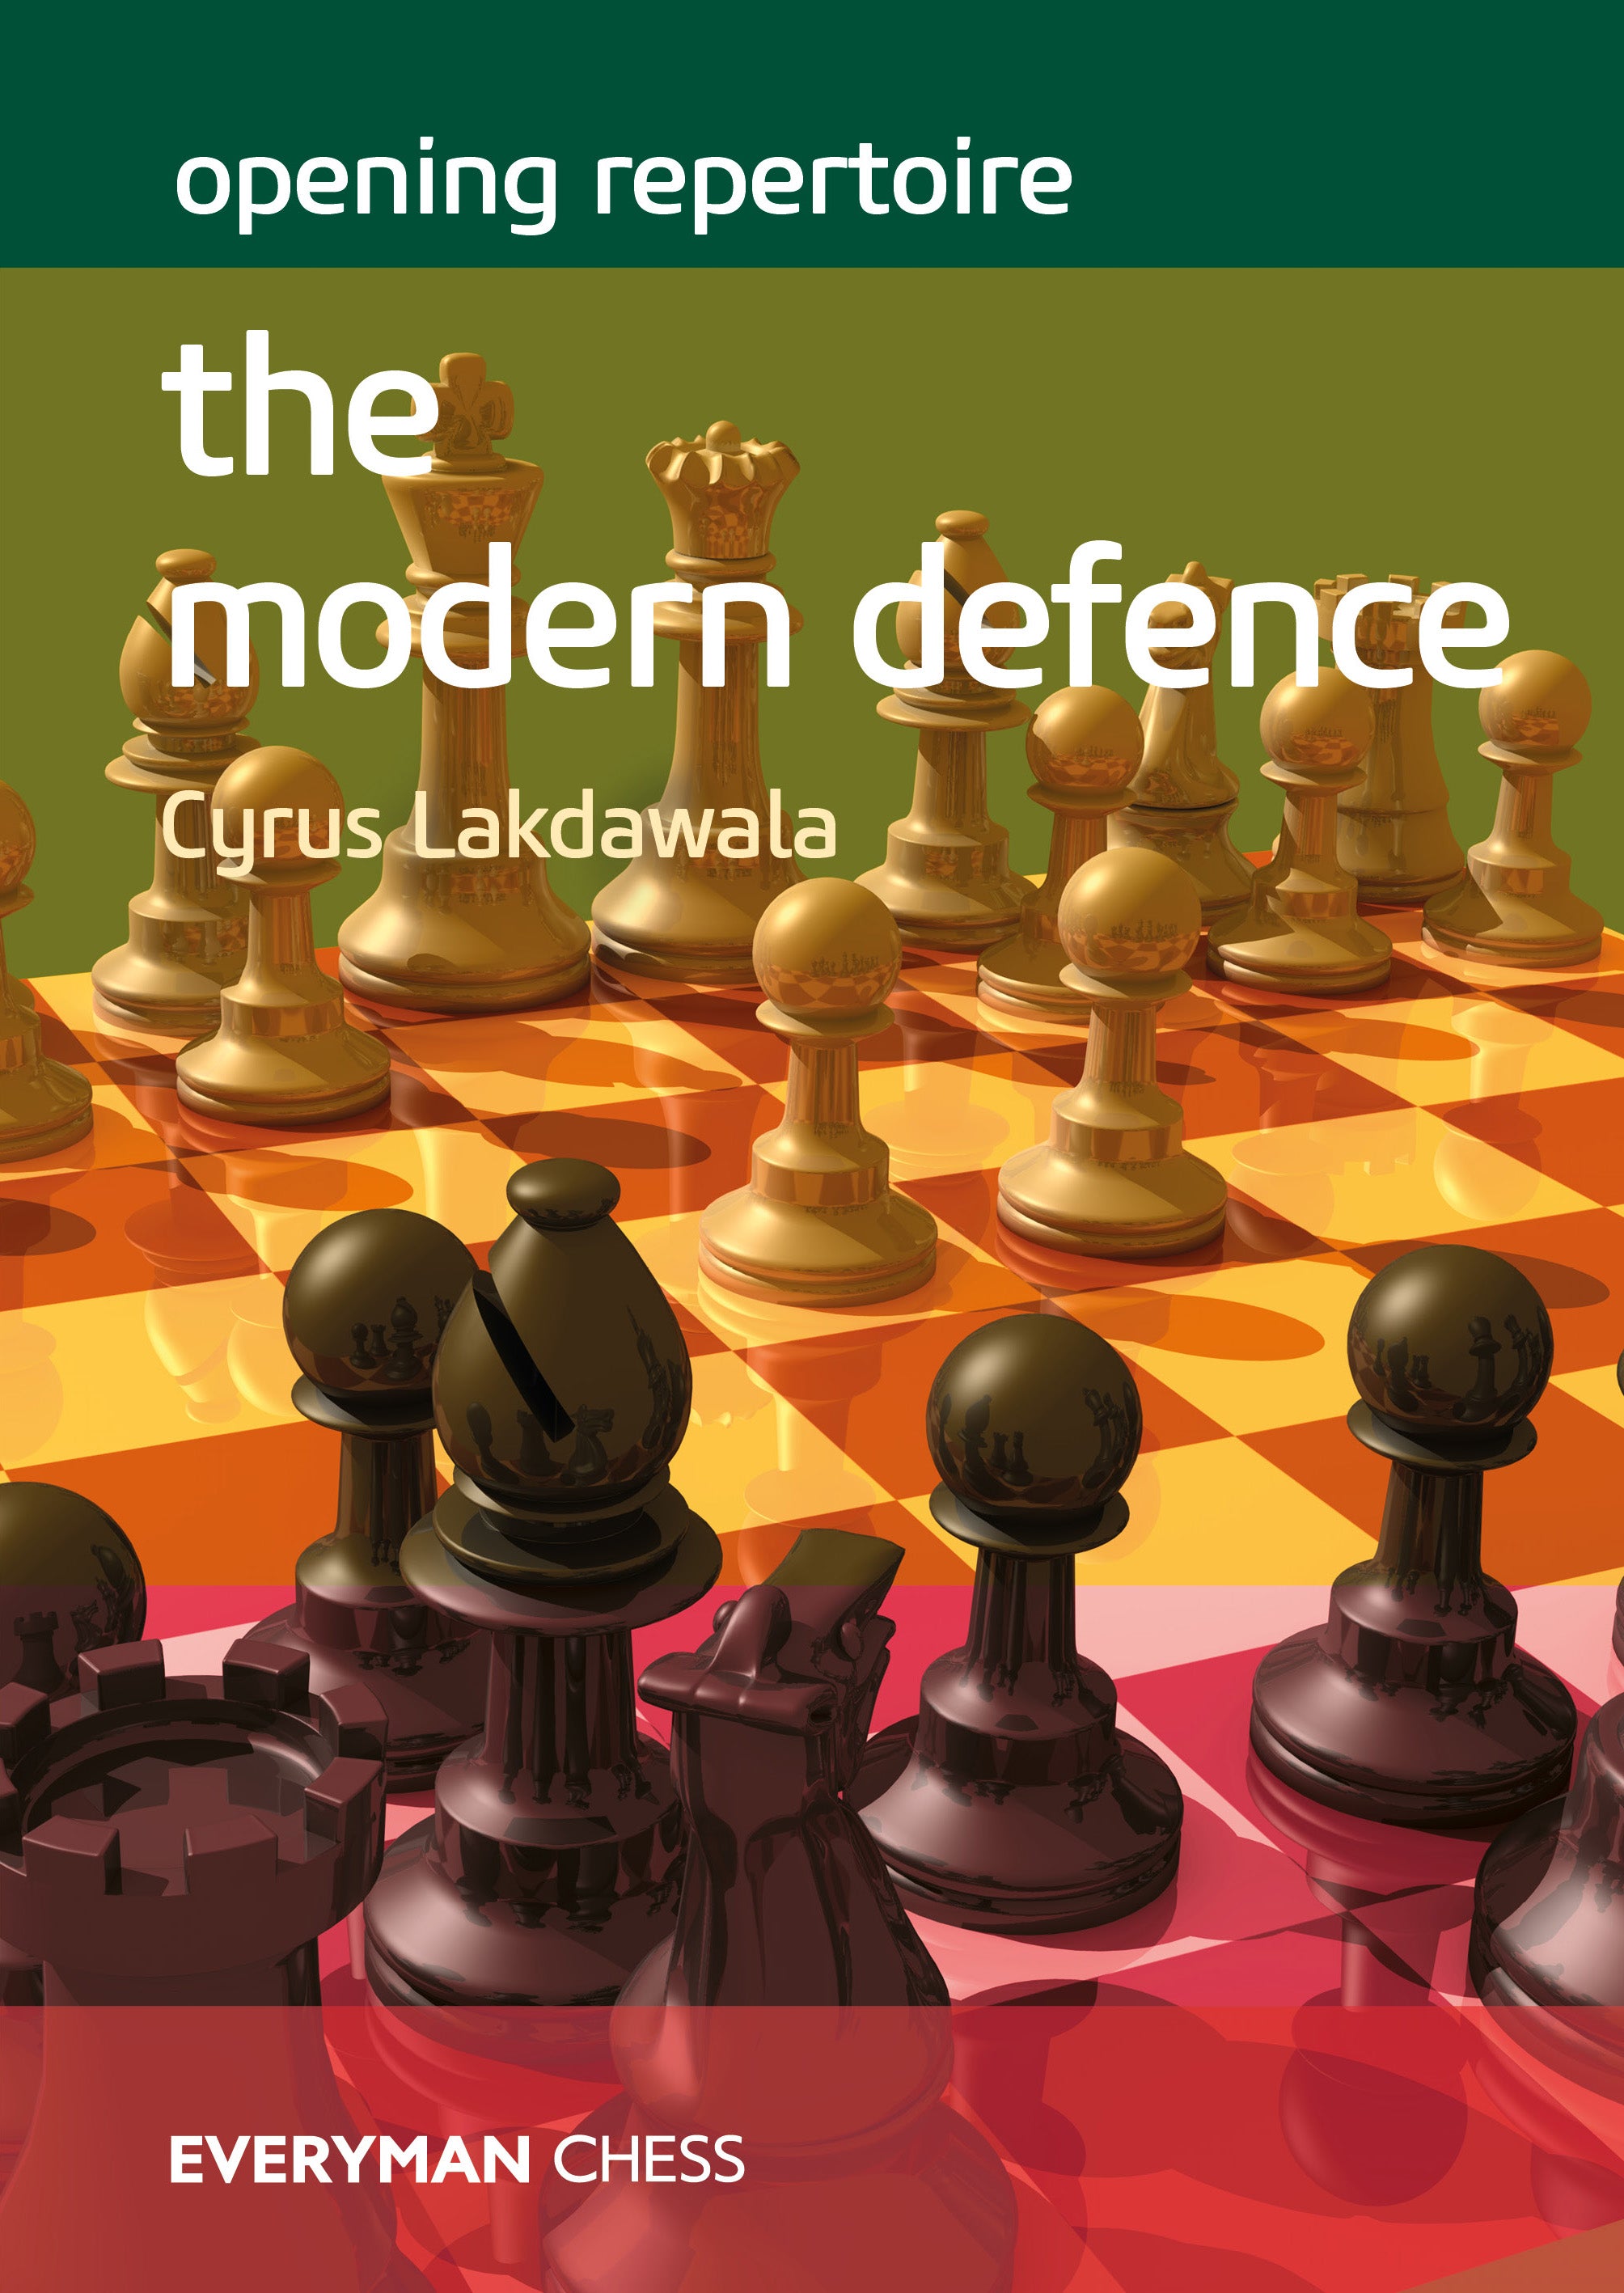 Chess, PDF, Chess Openings